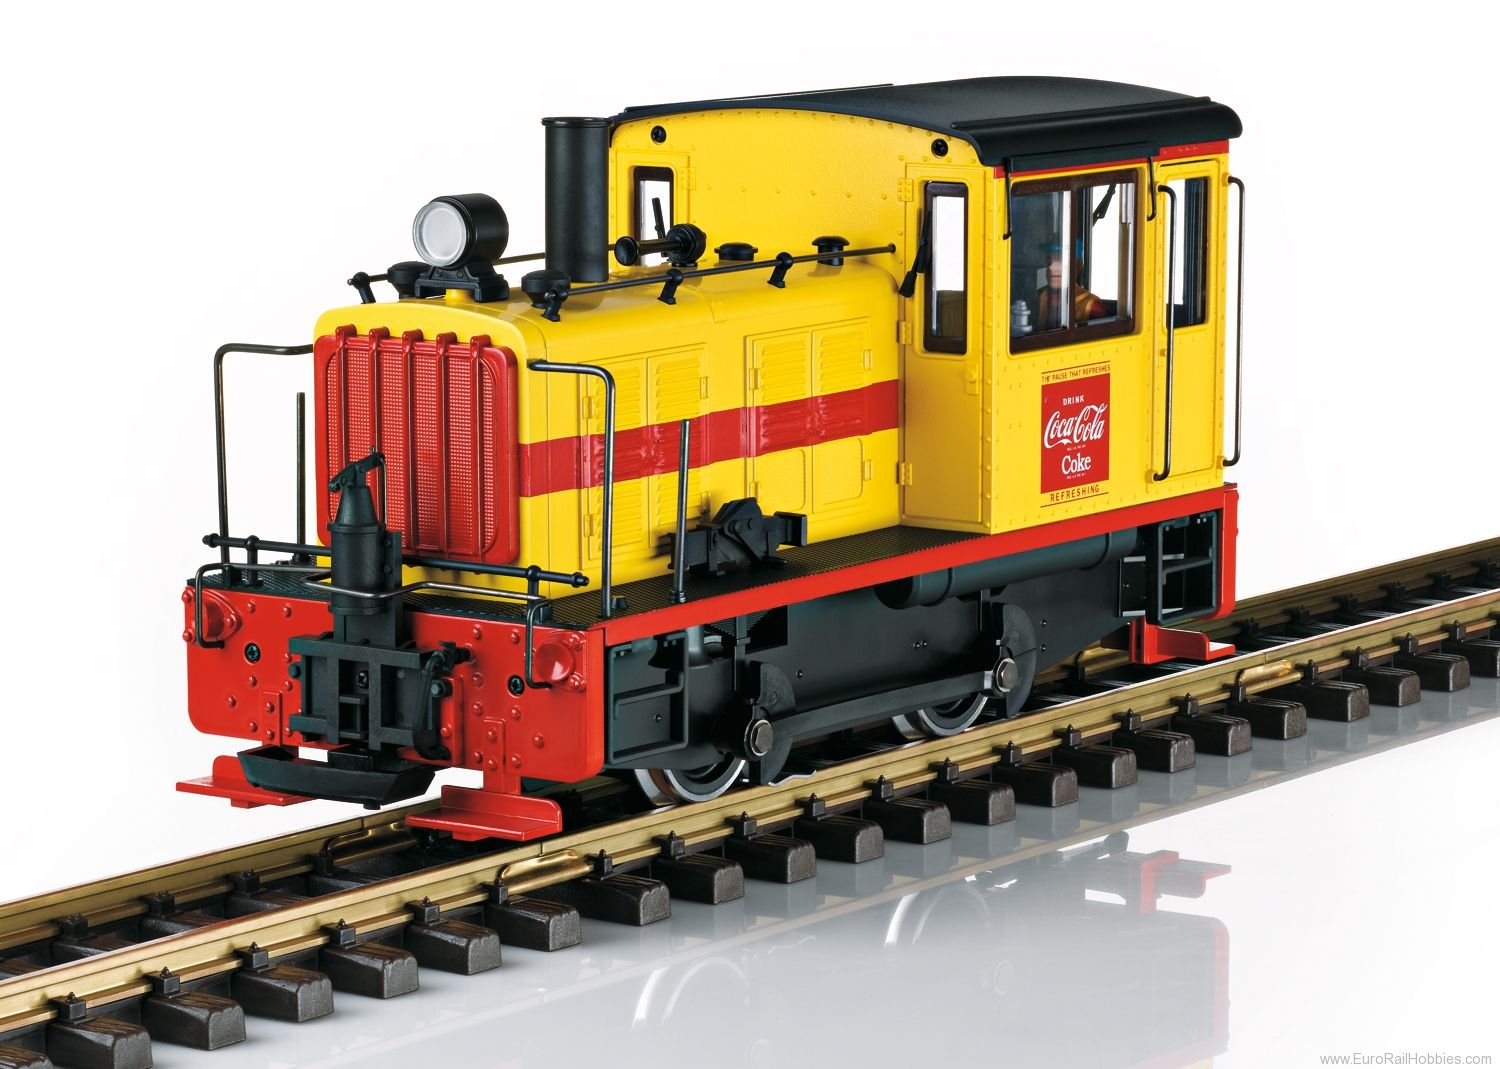 LGB 27631 Coca-Cola Diesel Locomotive (Factory Sold Out